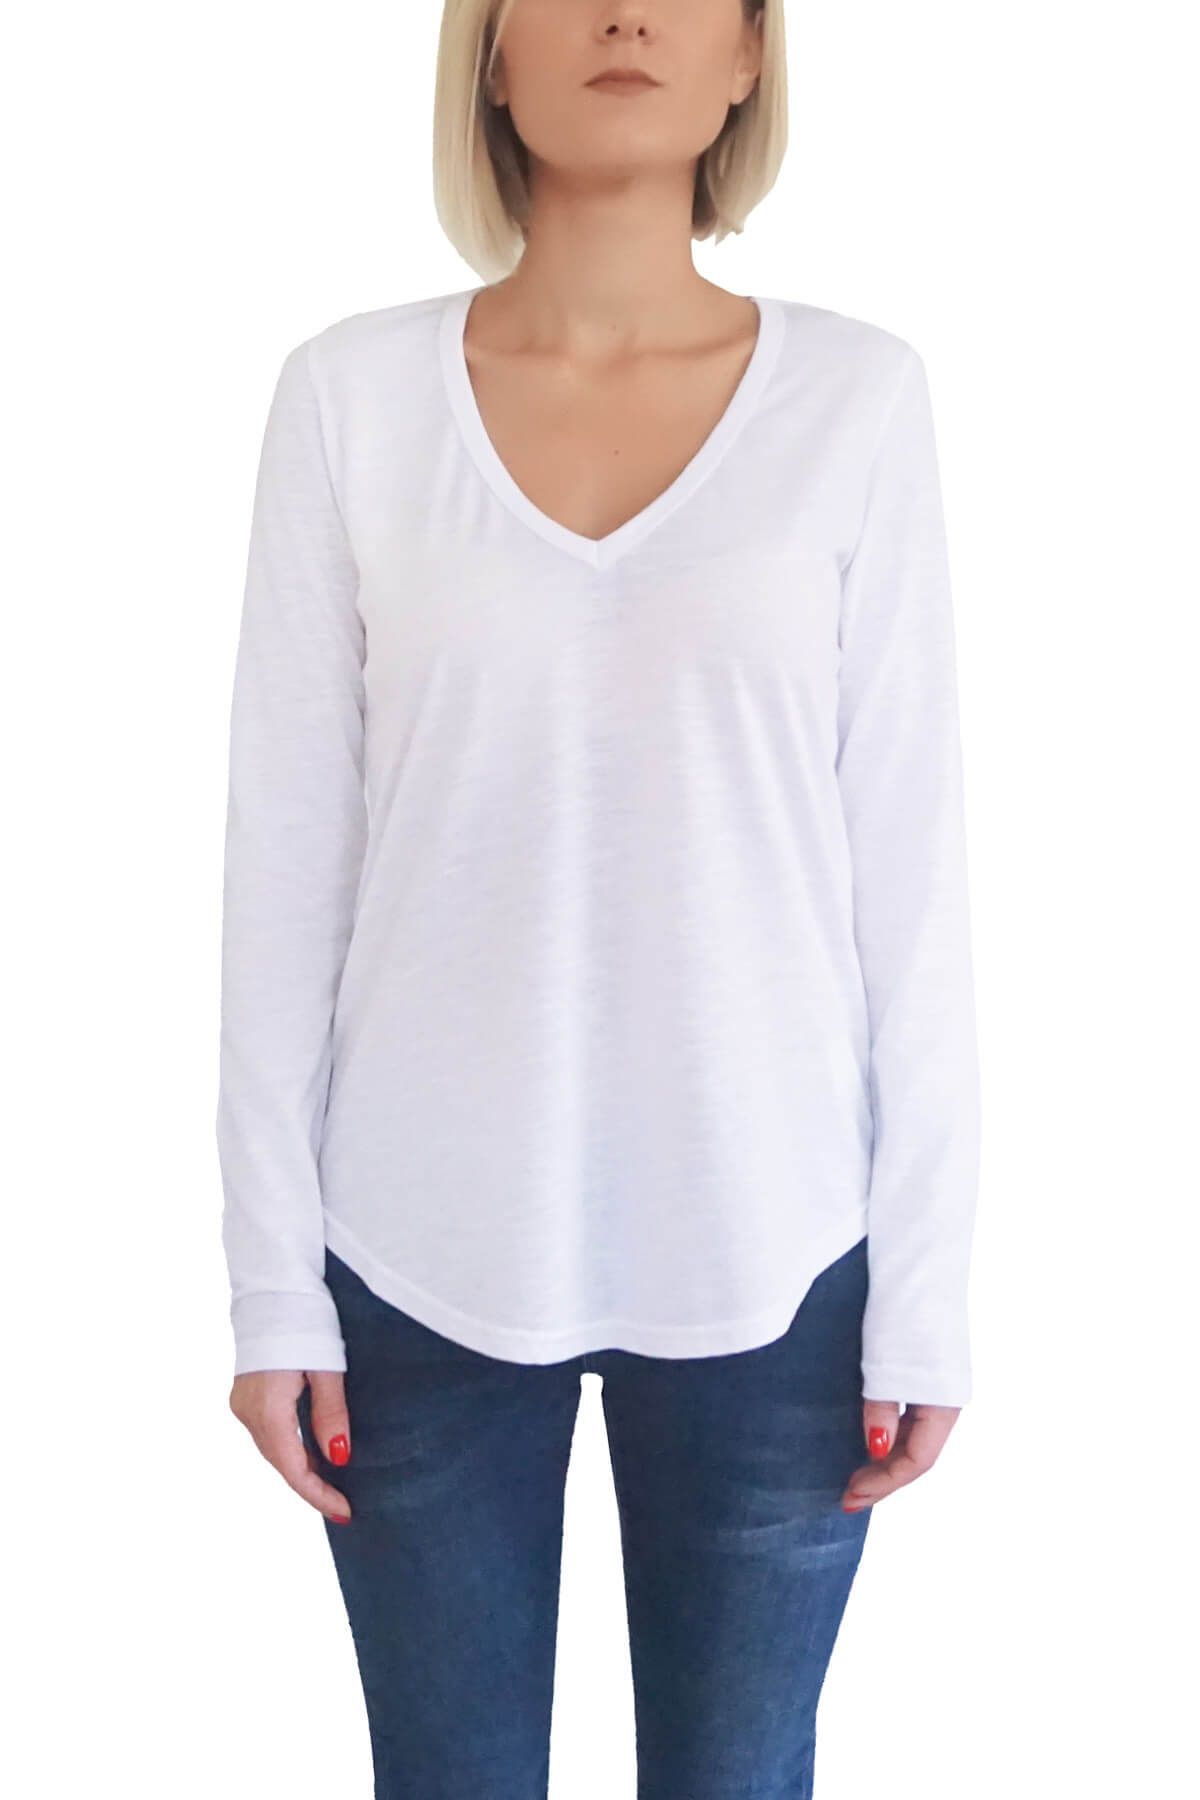 Mof Basics Kadın Beyaz T-Shirt UKVYT-B